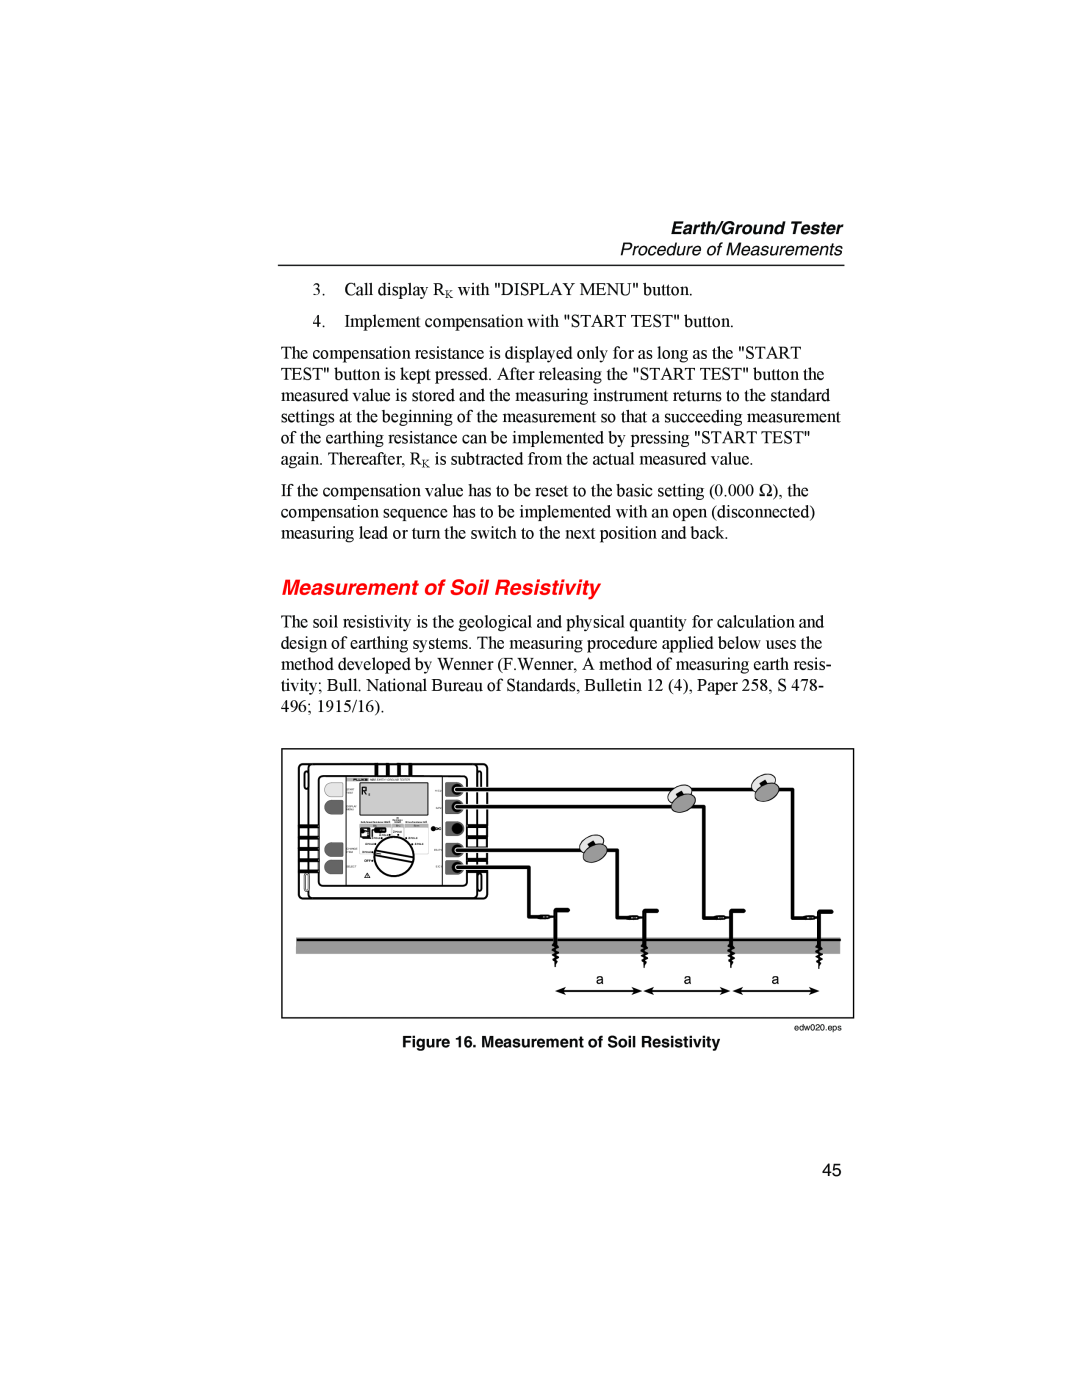 Fluke 1625 user manual Measurement of Soil Resistivity, Earth/Ground Tester, Procedure of Measurements 